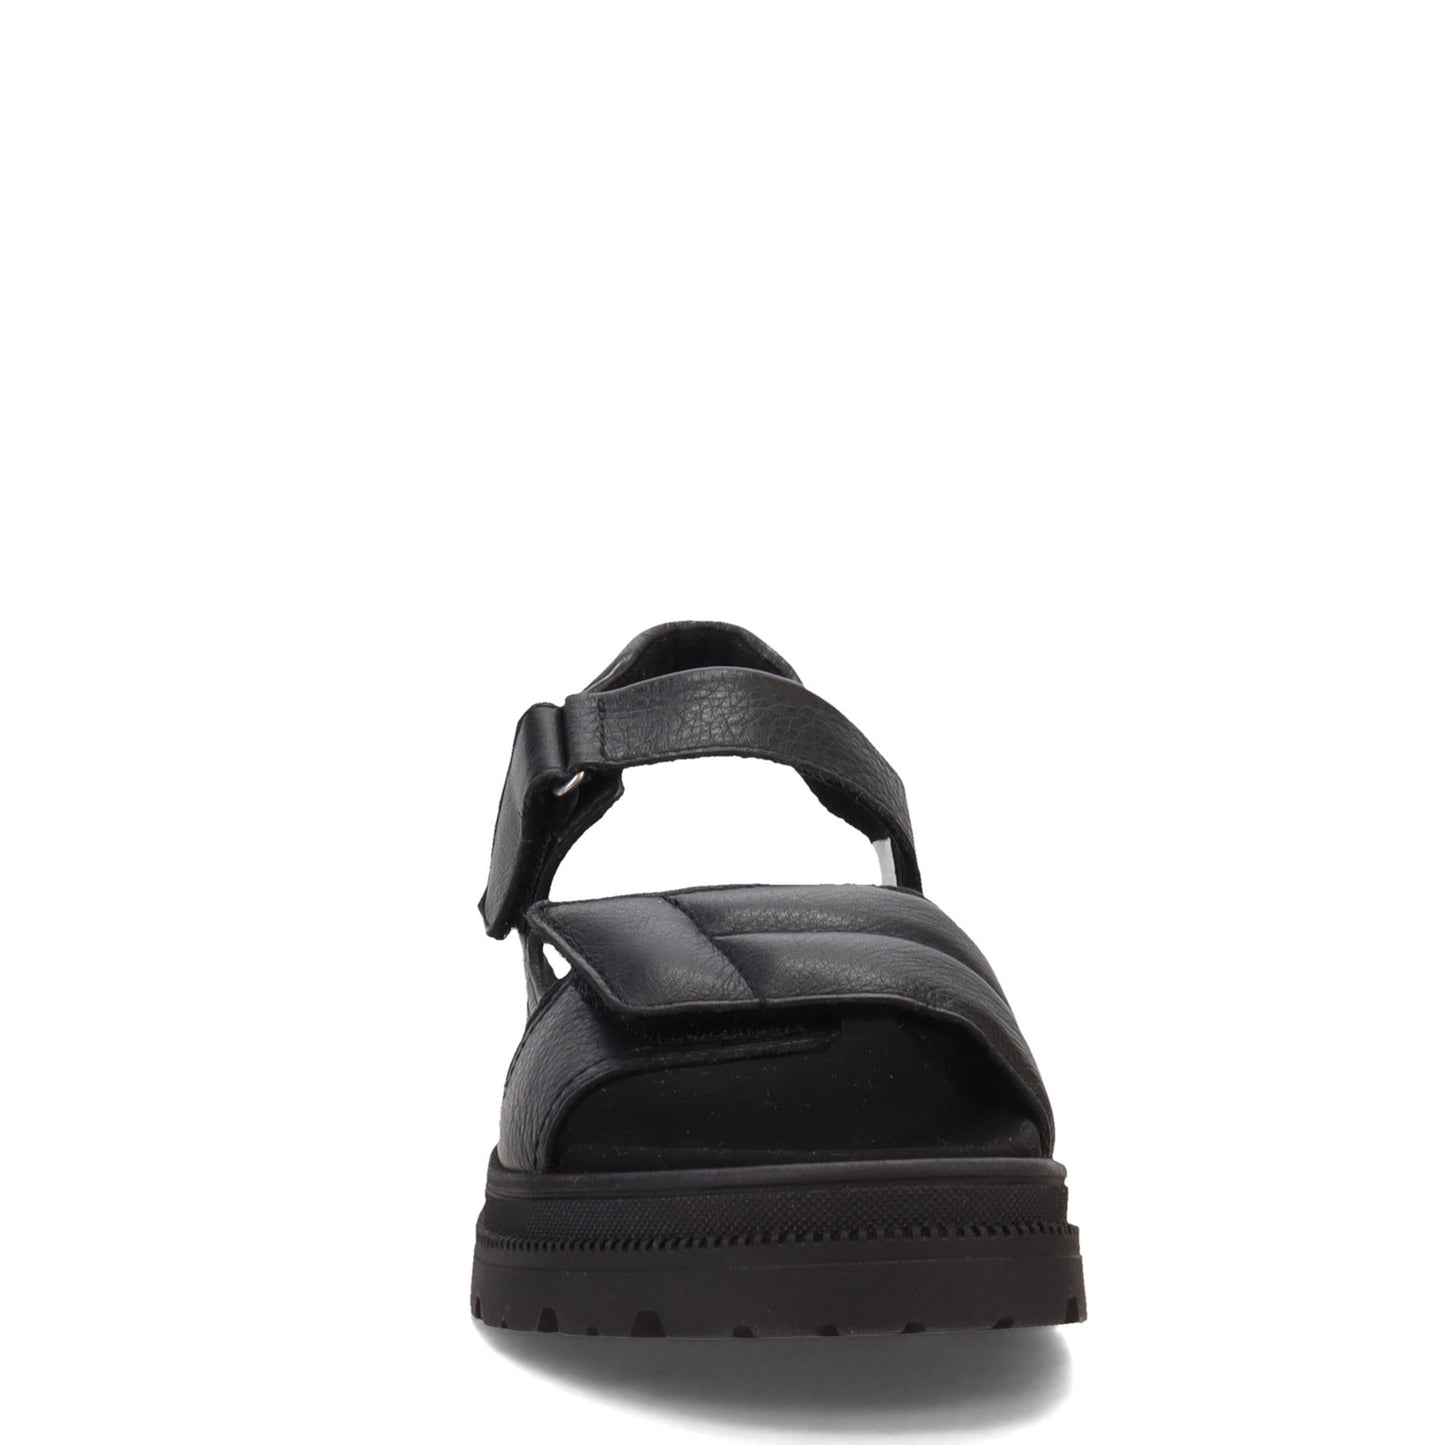 Peltz Shoes  Women's ara Danya Sandal Black 12-21304-01